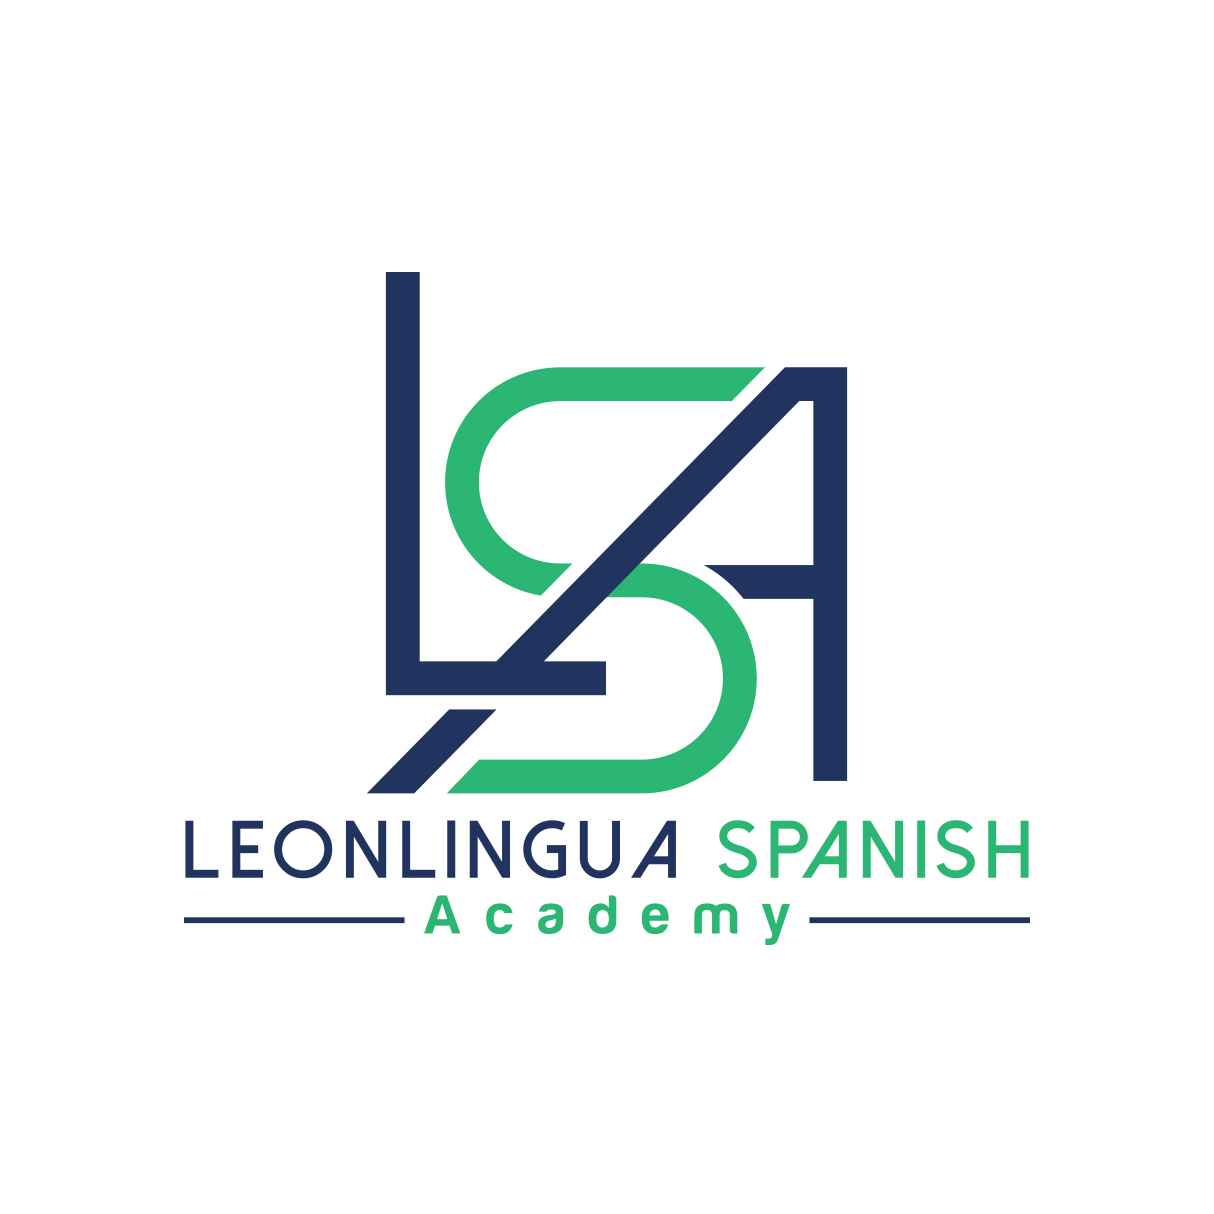 60352_Leonlingua Spanish Academy logo_JK_simplero